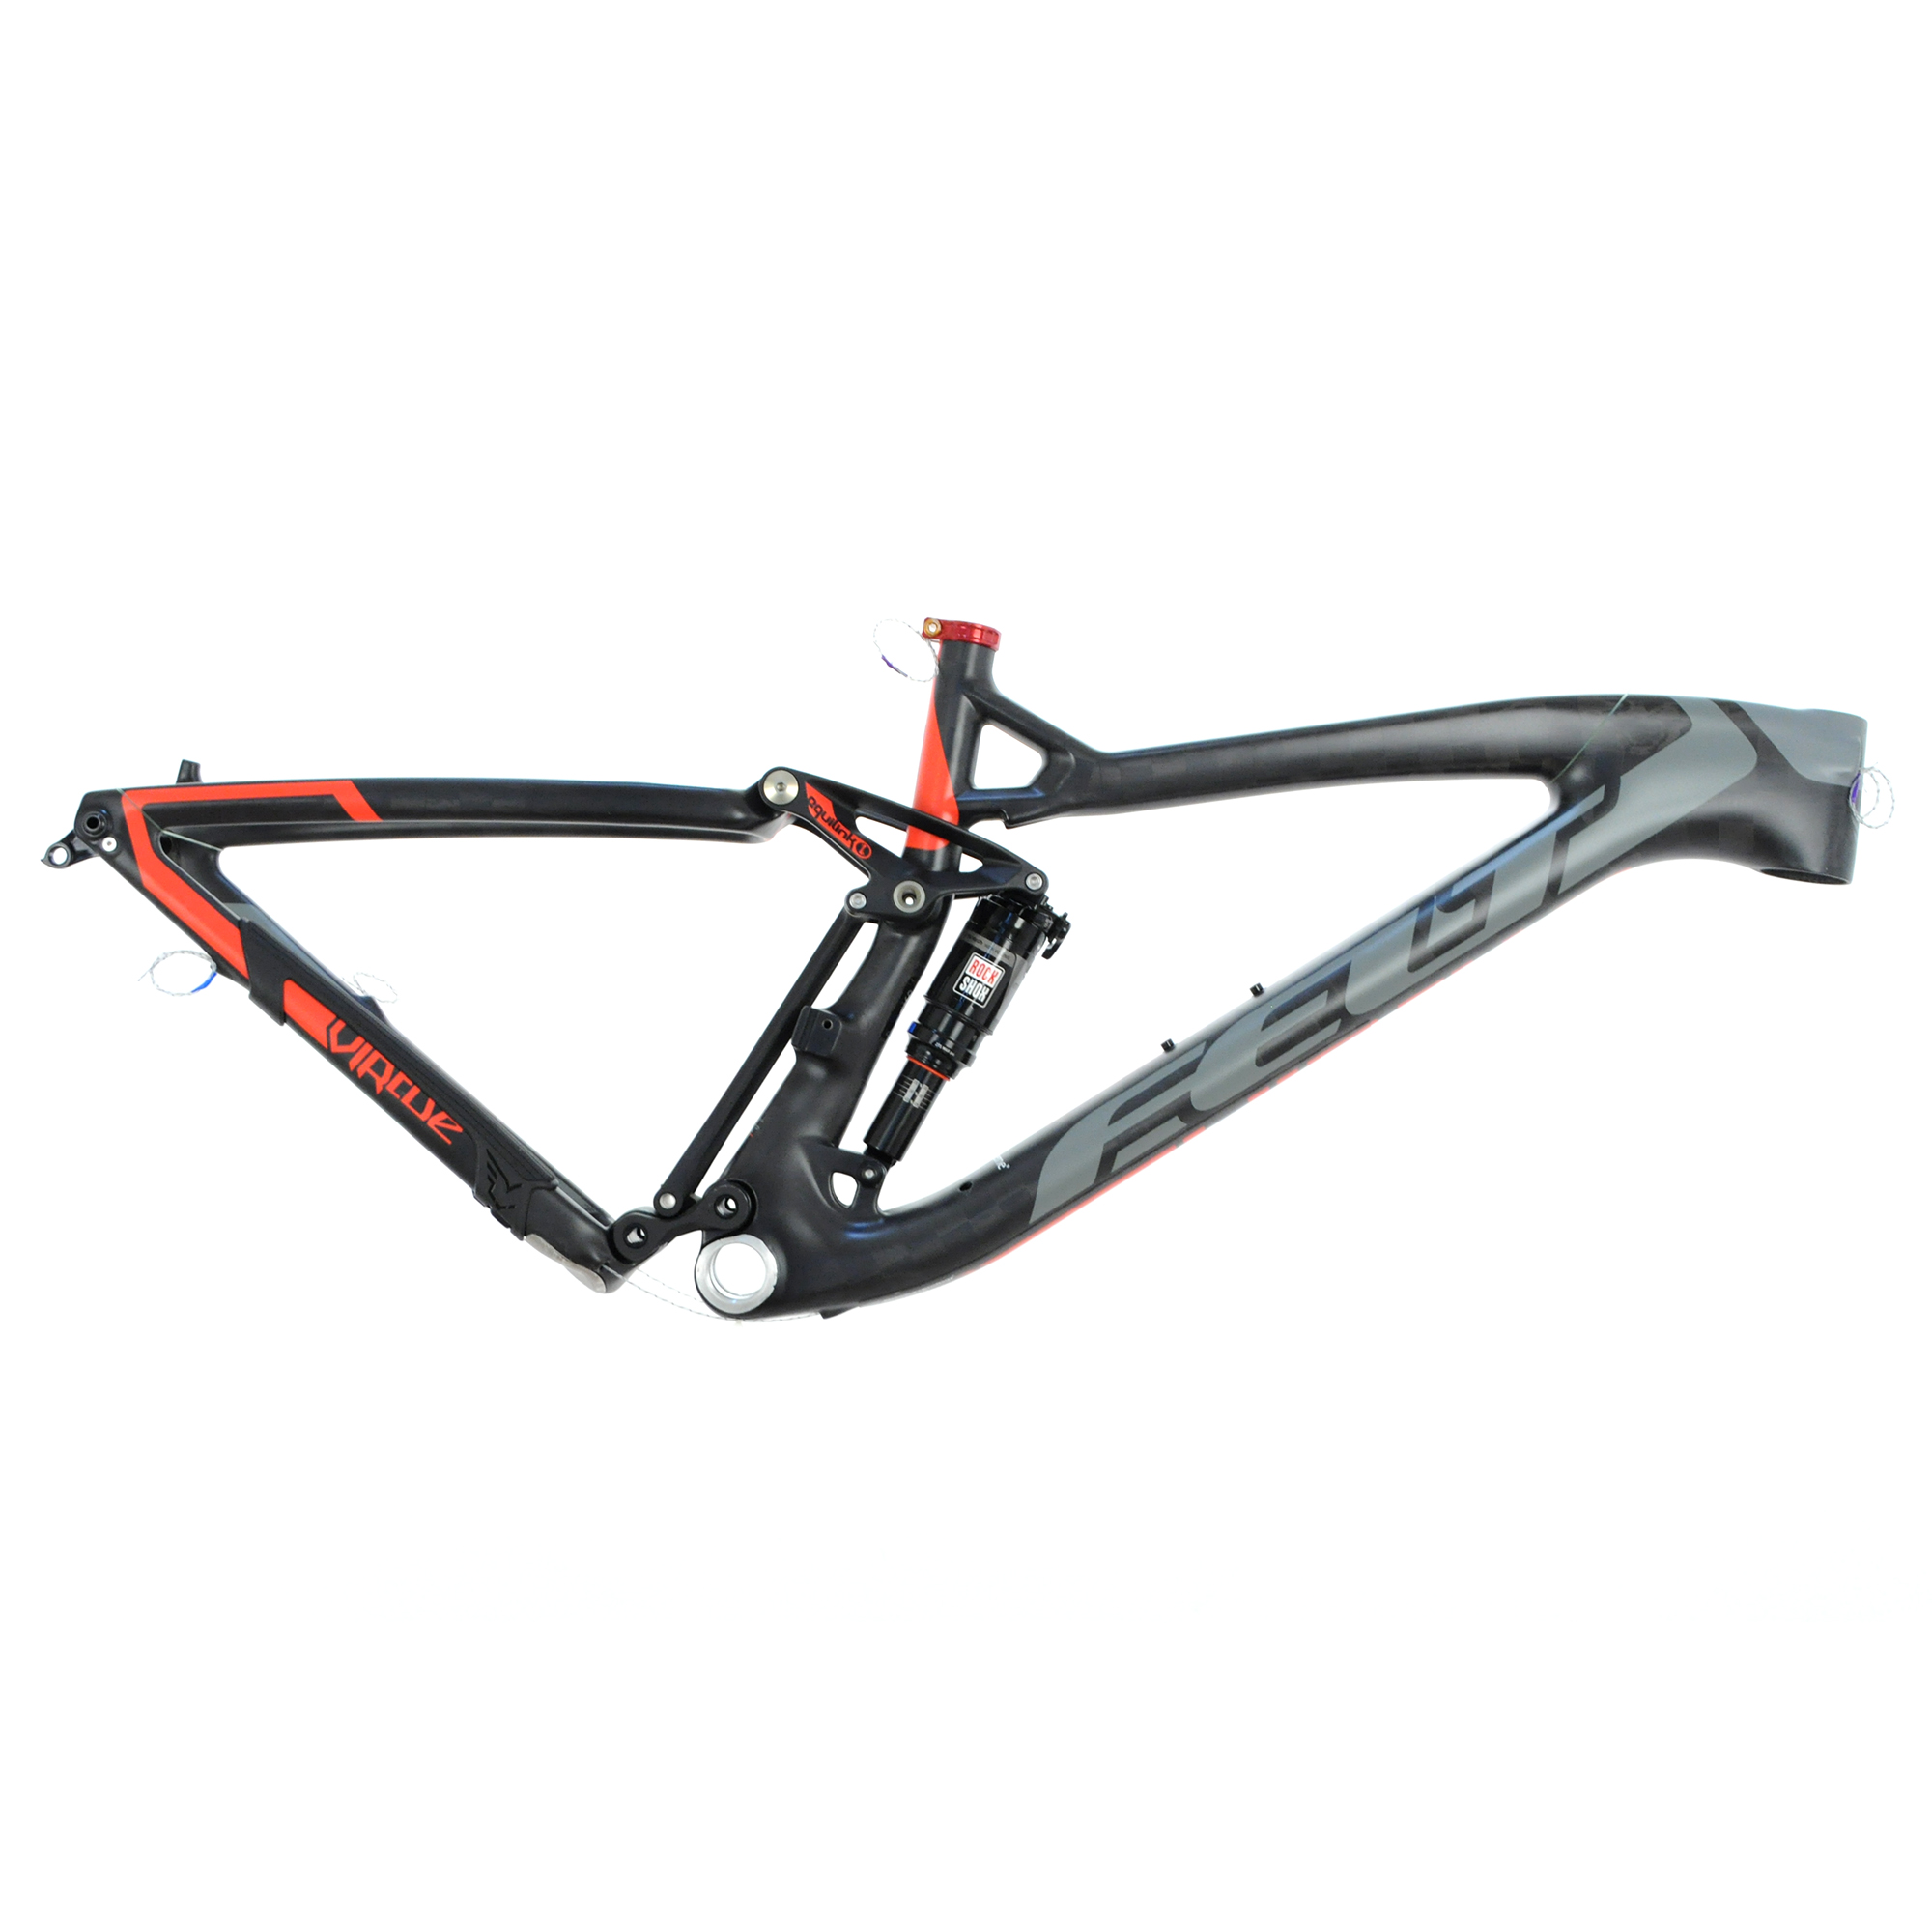 felt carbon fiber mountain bike